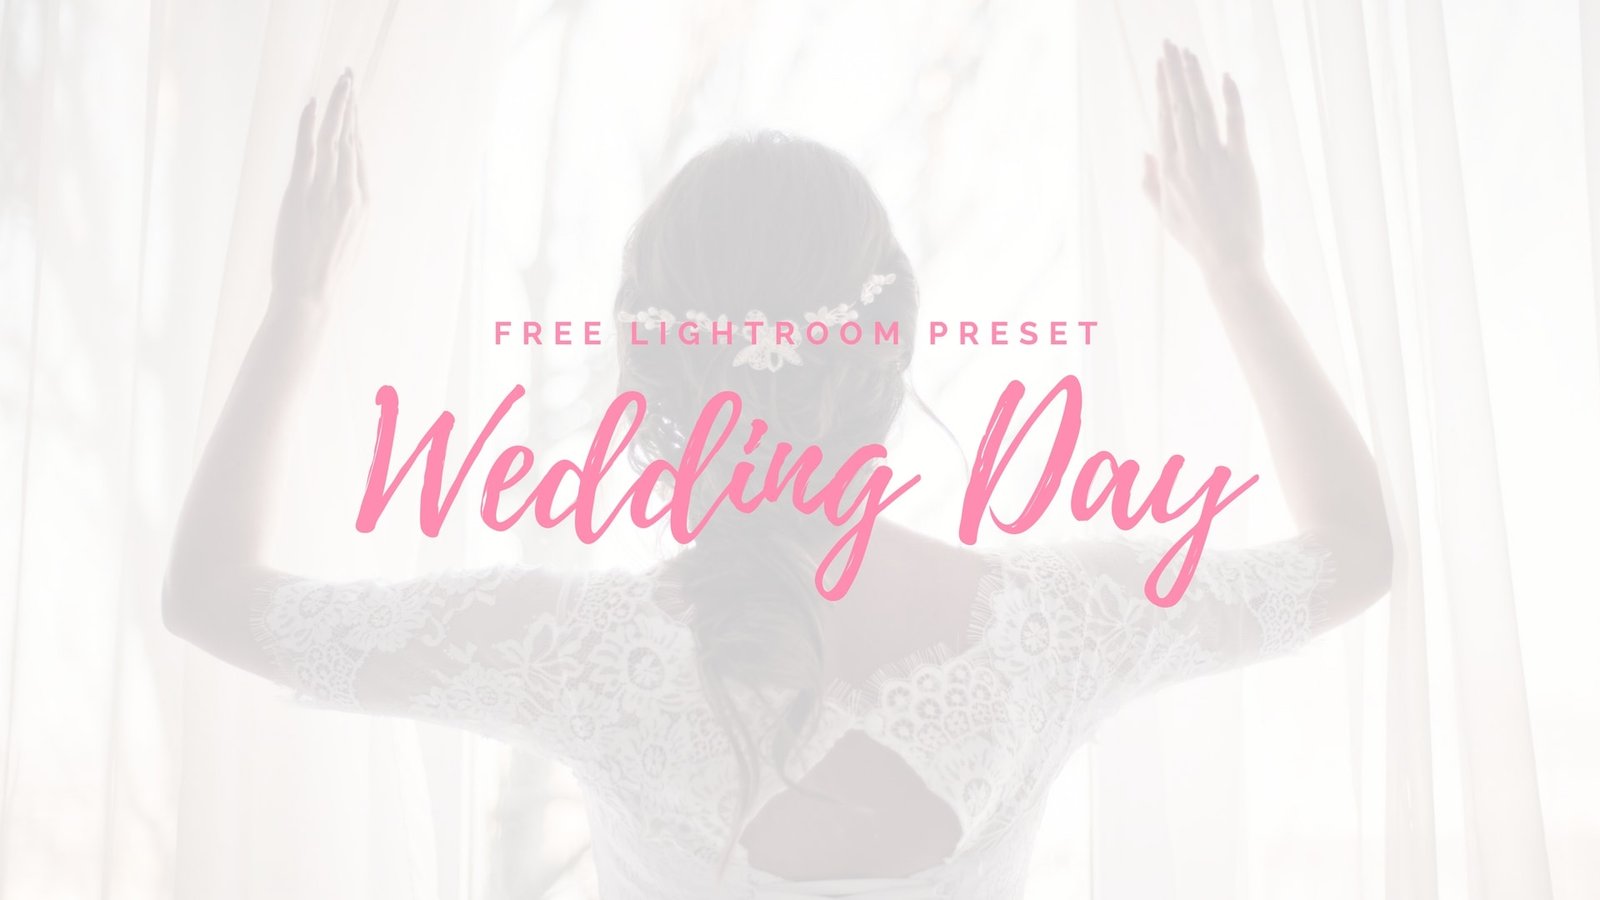 Wedding Day - FREE Lightroom Preset - Tuts and Reviews - tutsandreviews.com